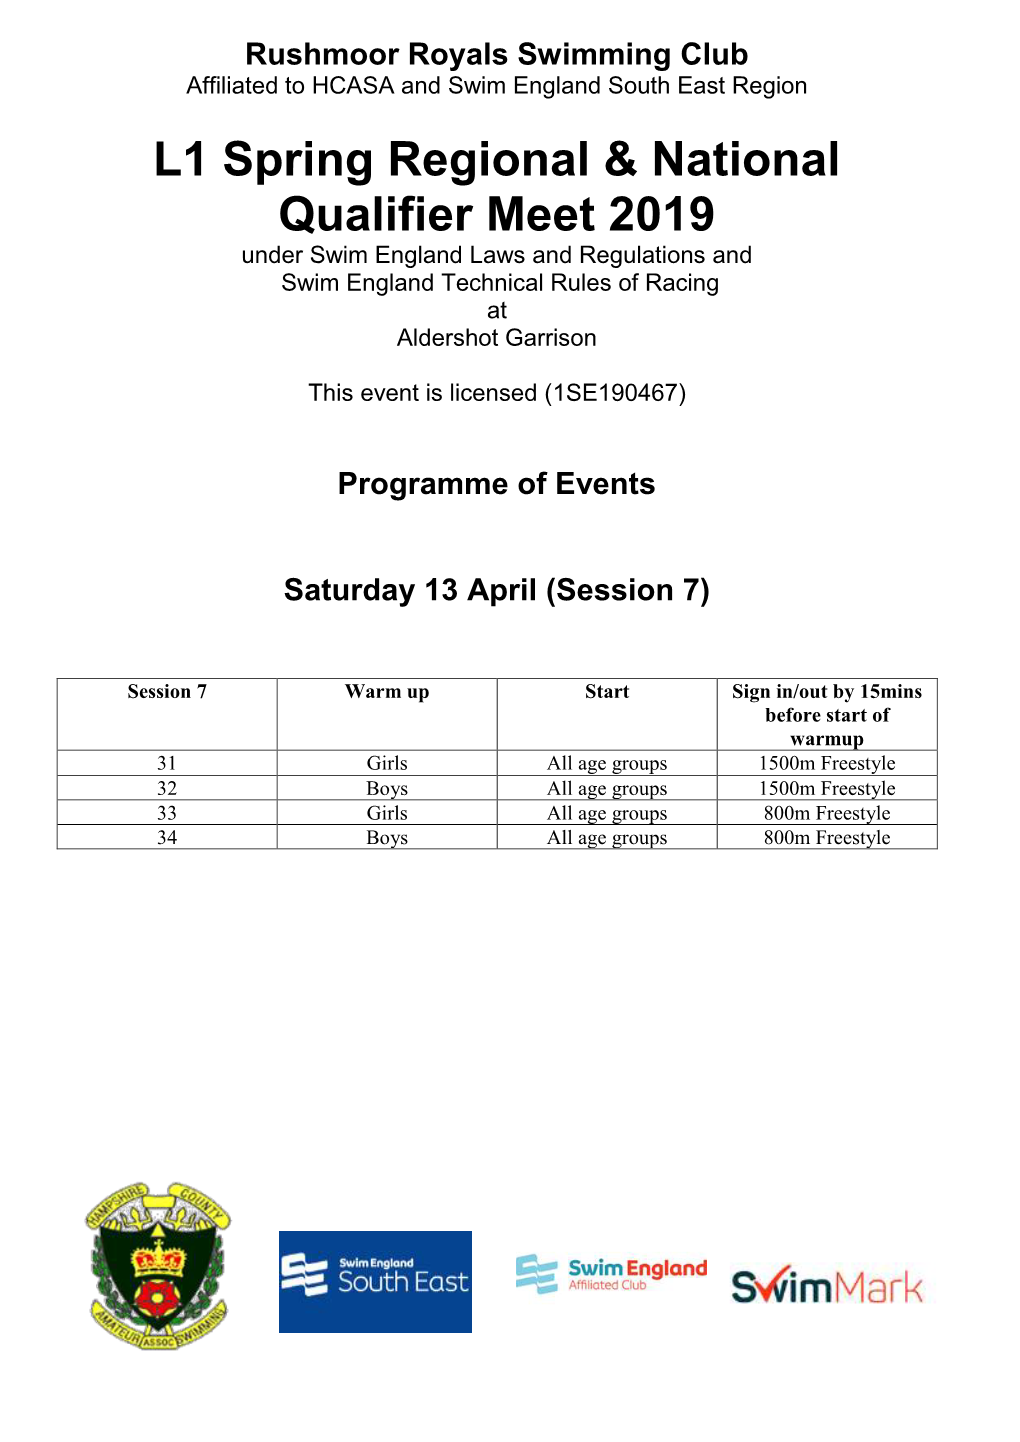 L1 Spring Regional & National Qualifier Meet 2019